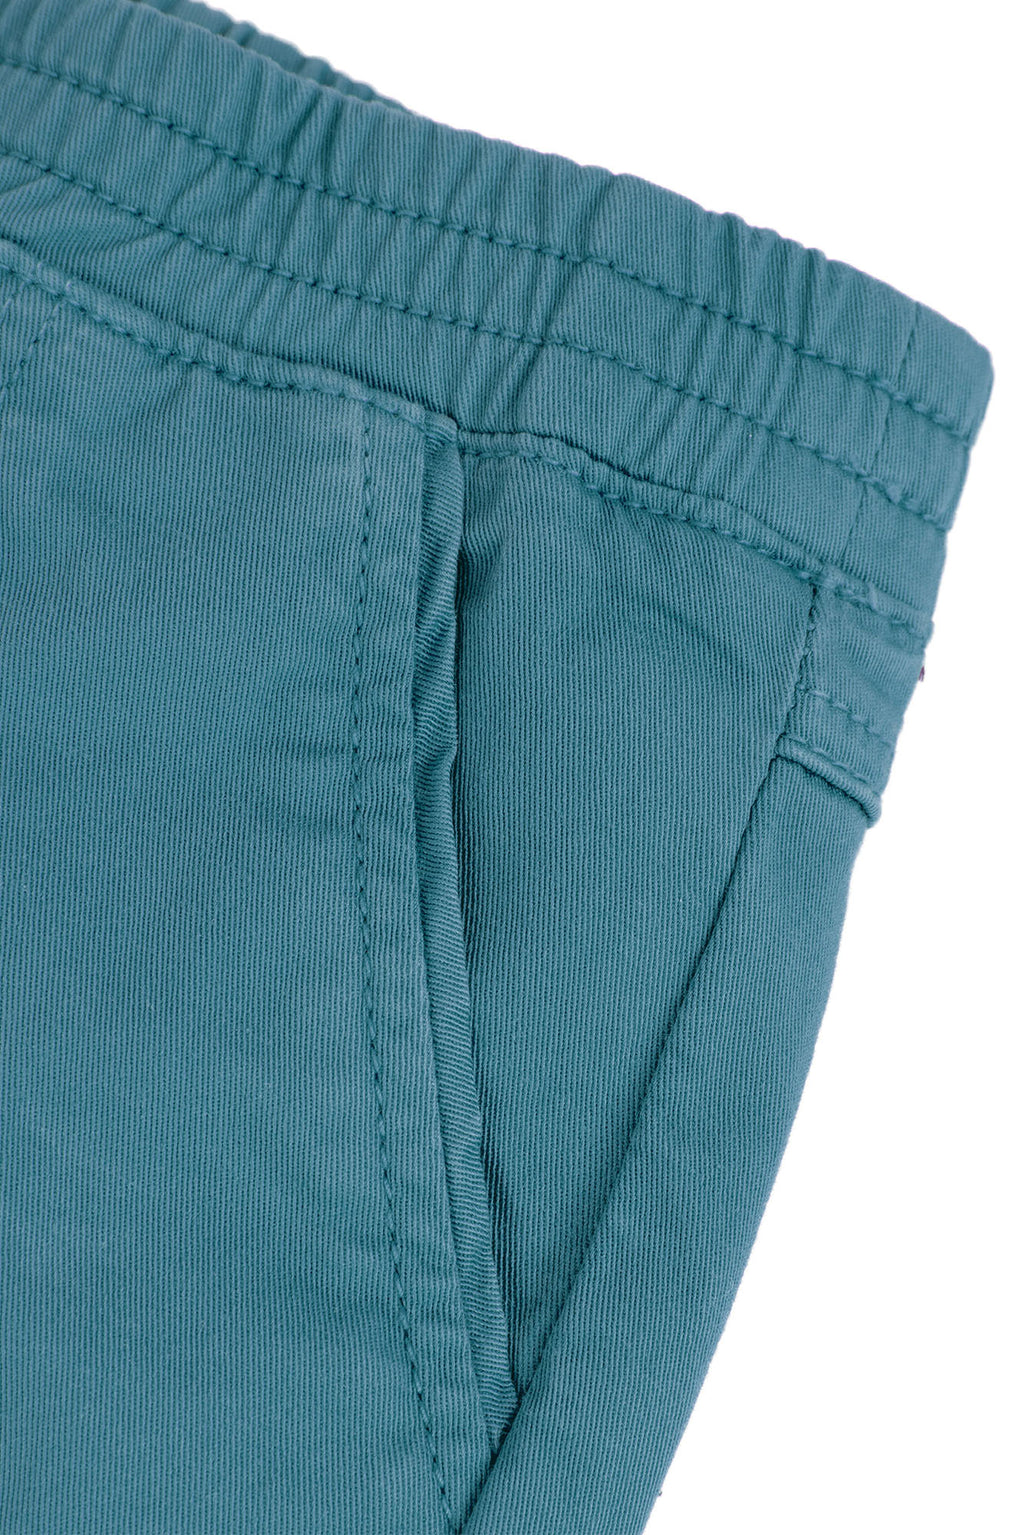 Pantalon - Sarga Verde pato